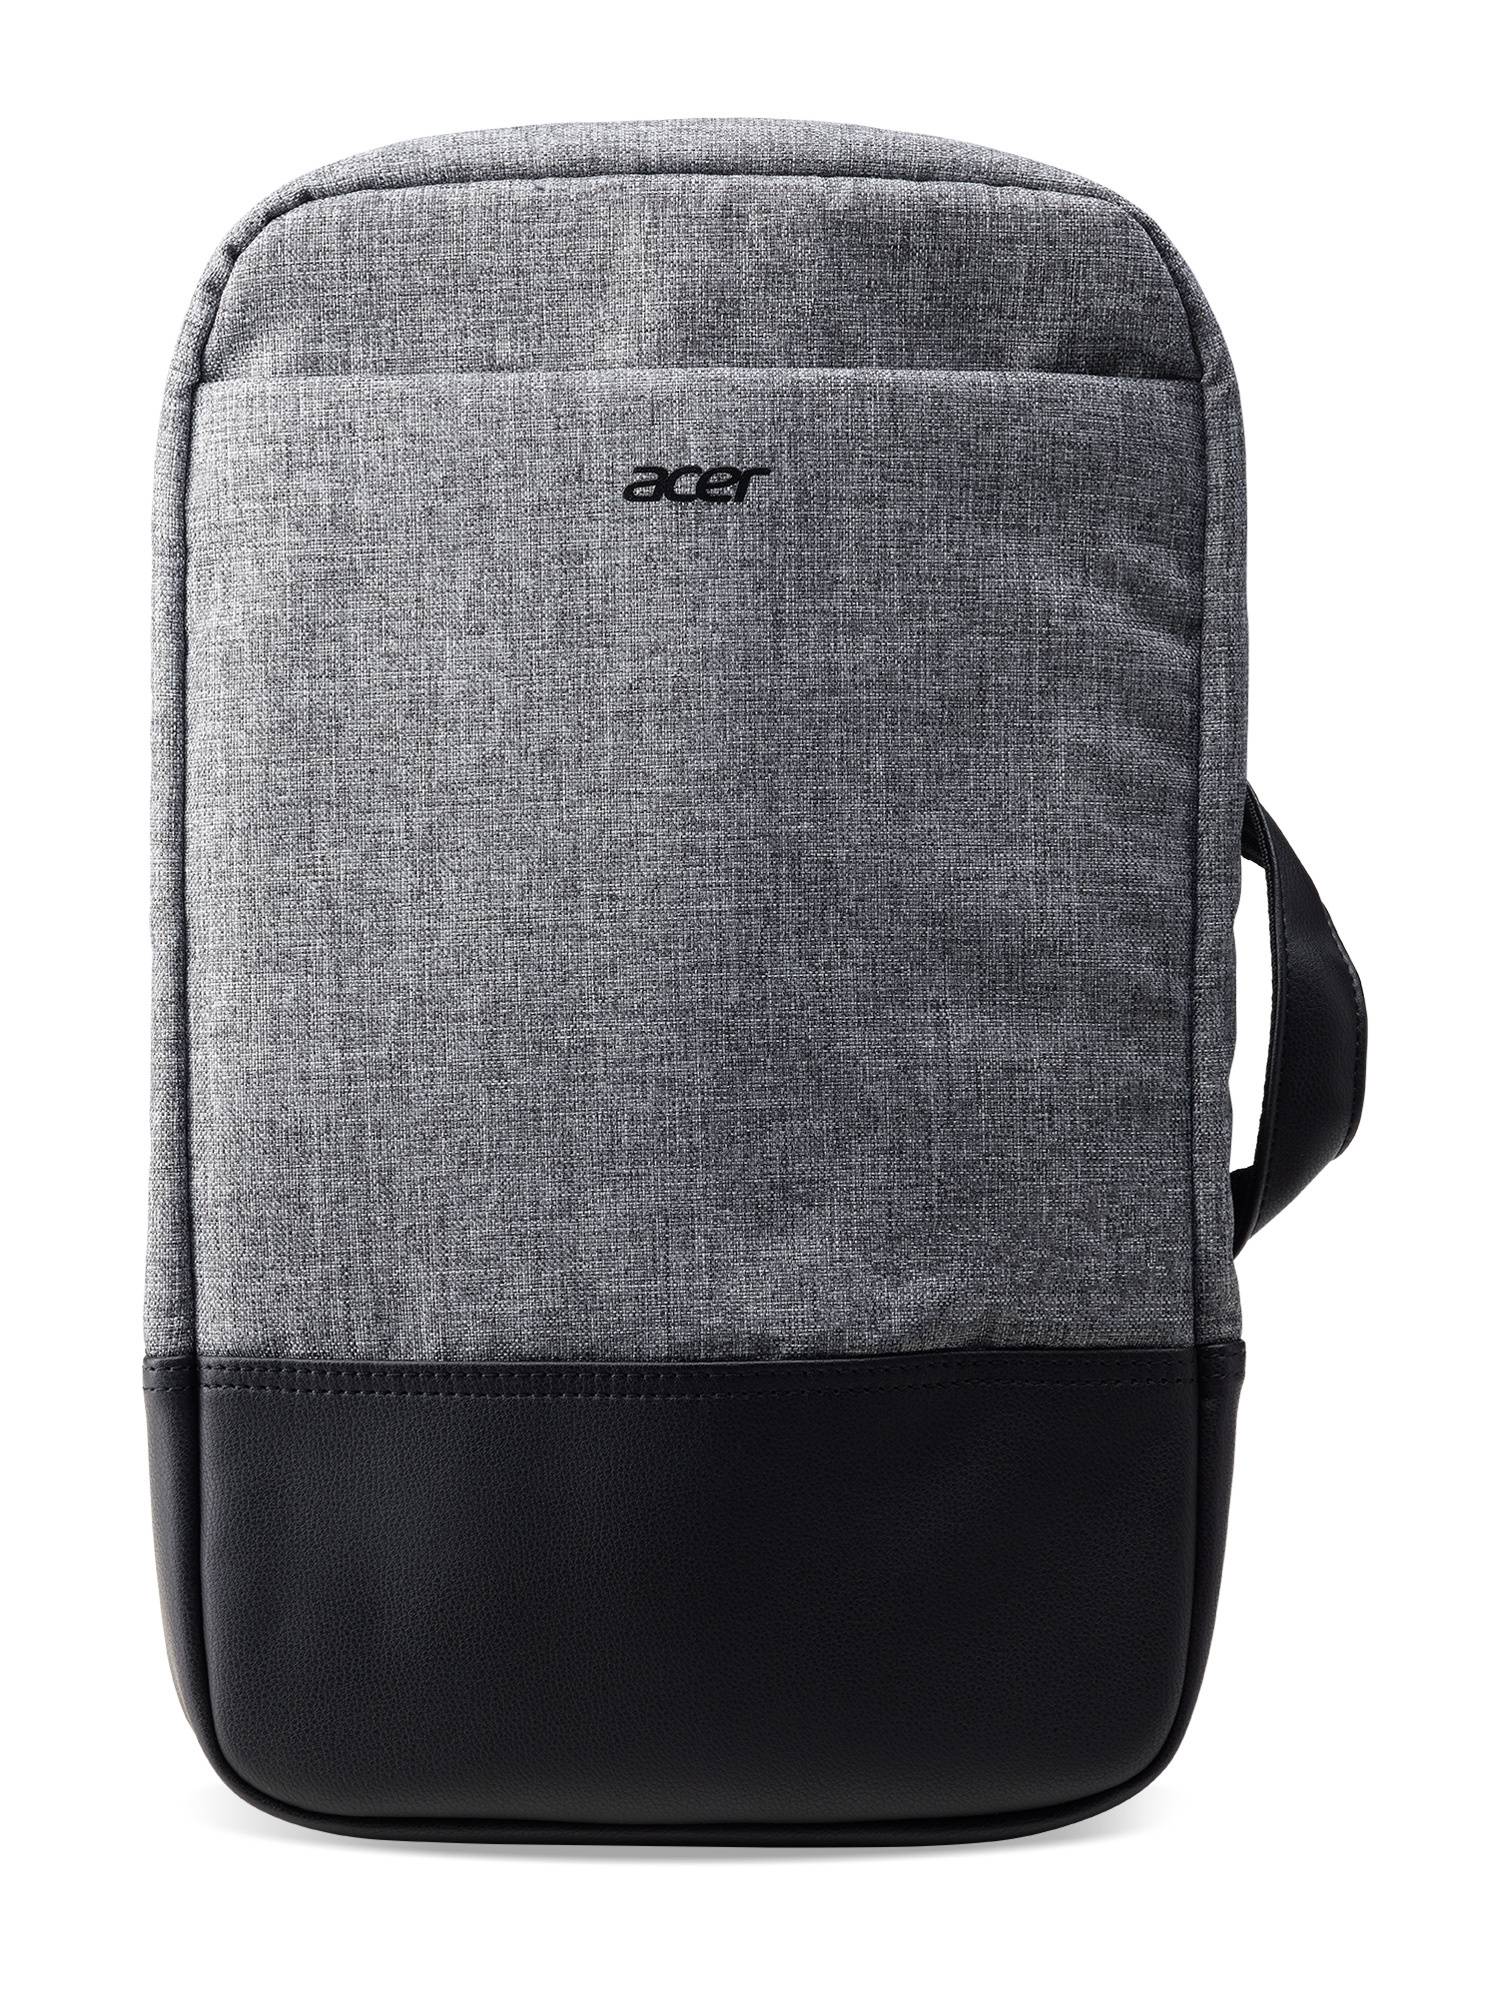 Рюкзак для ноутбука 14" Acer ABG810 3in1, полиэстер, серый/черный (NP.BAG1A.289)